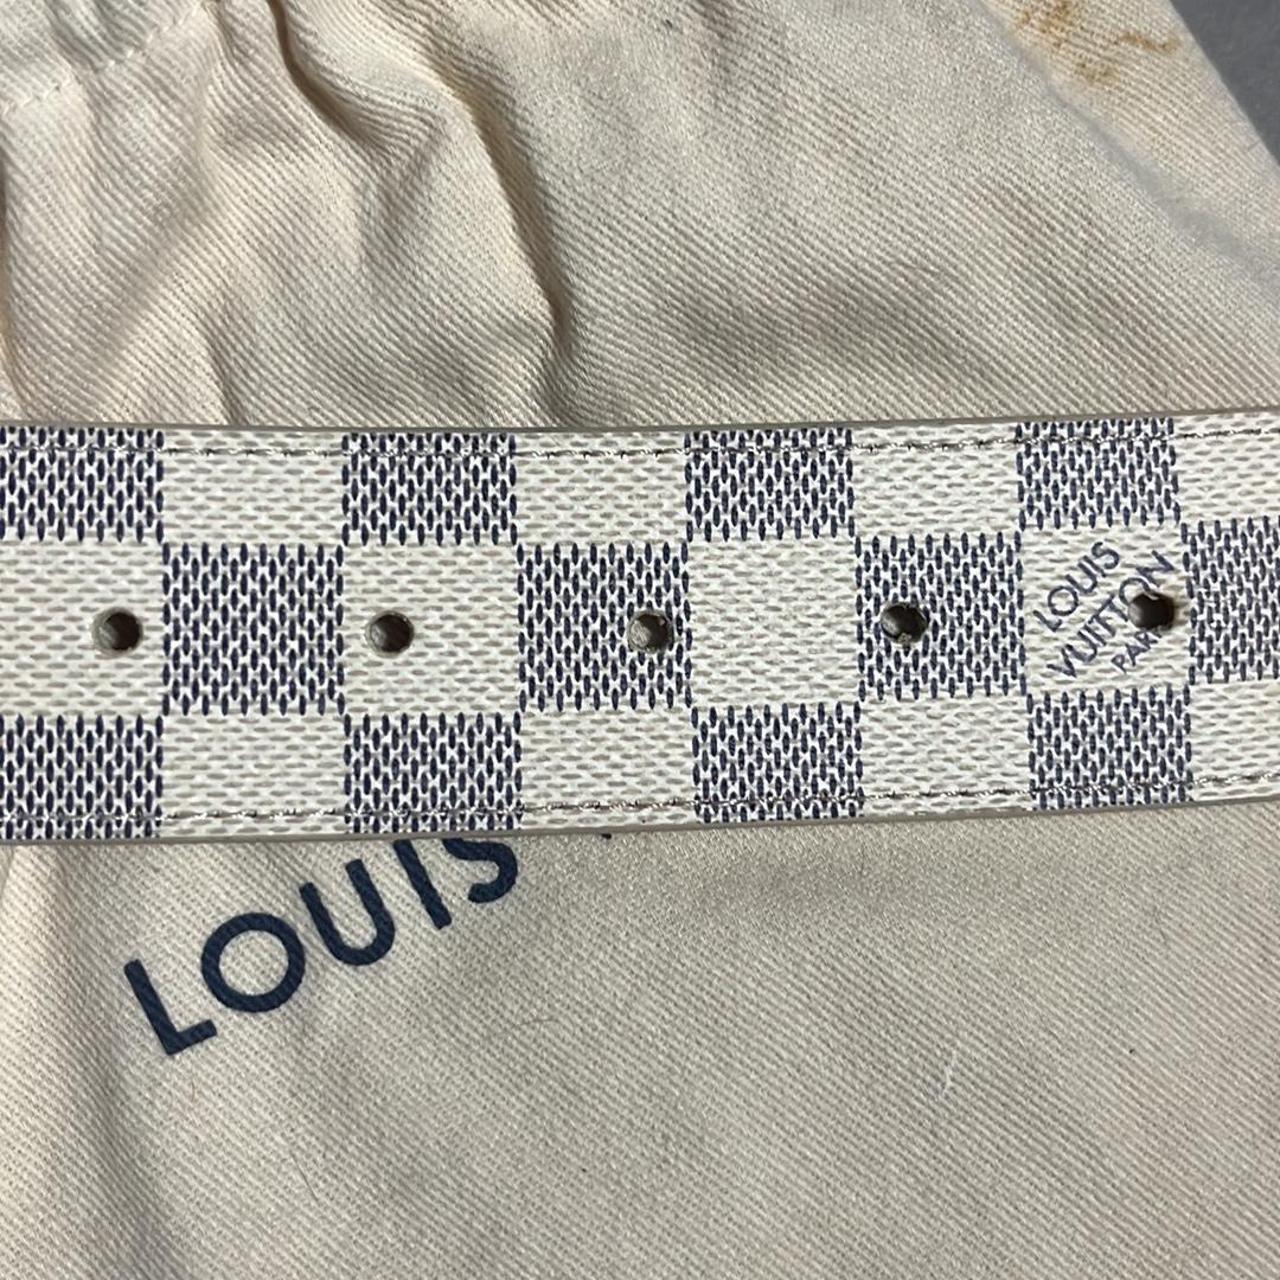 white louis vuitton belt, bought at a garage sale - Depop